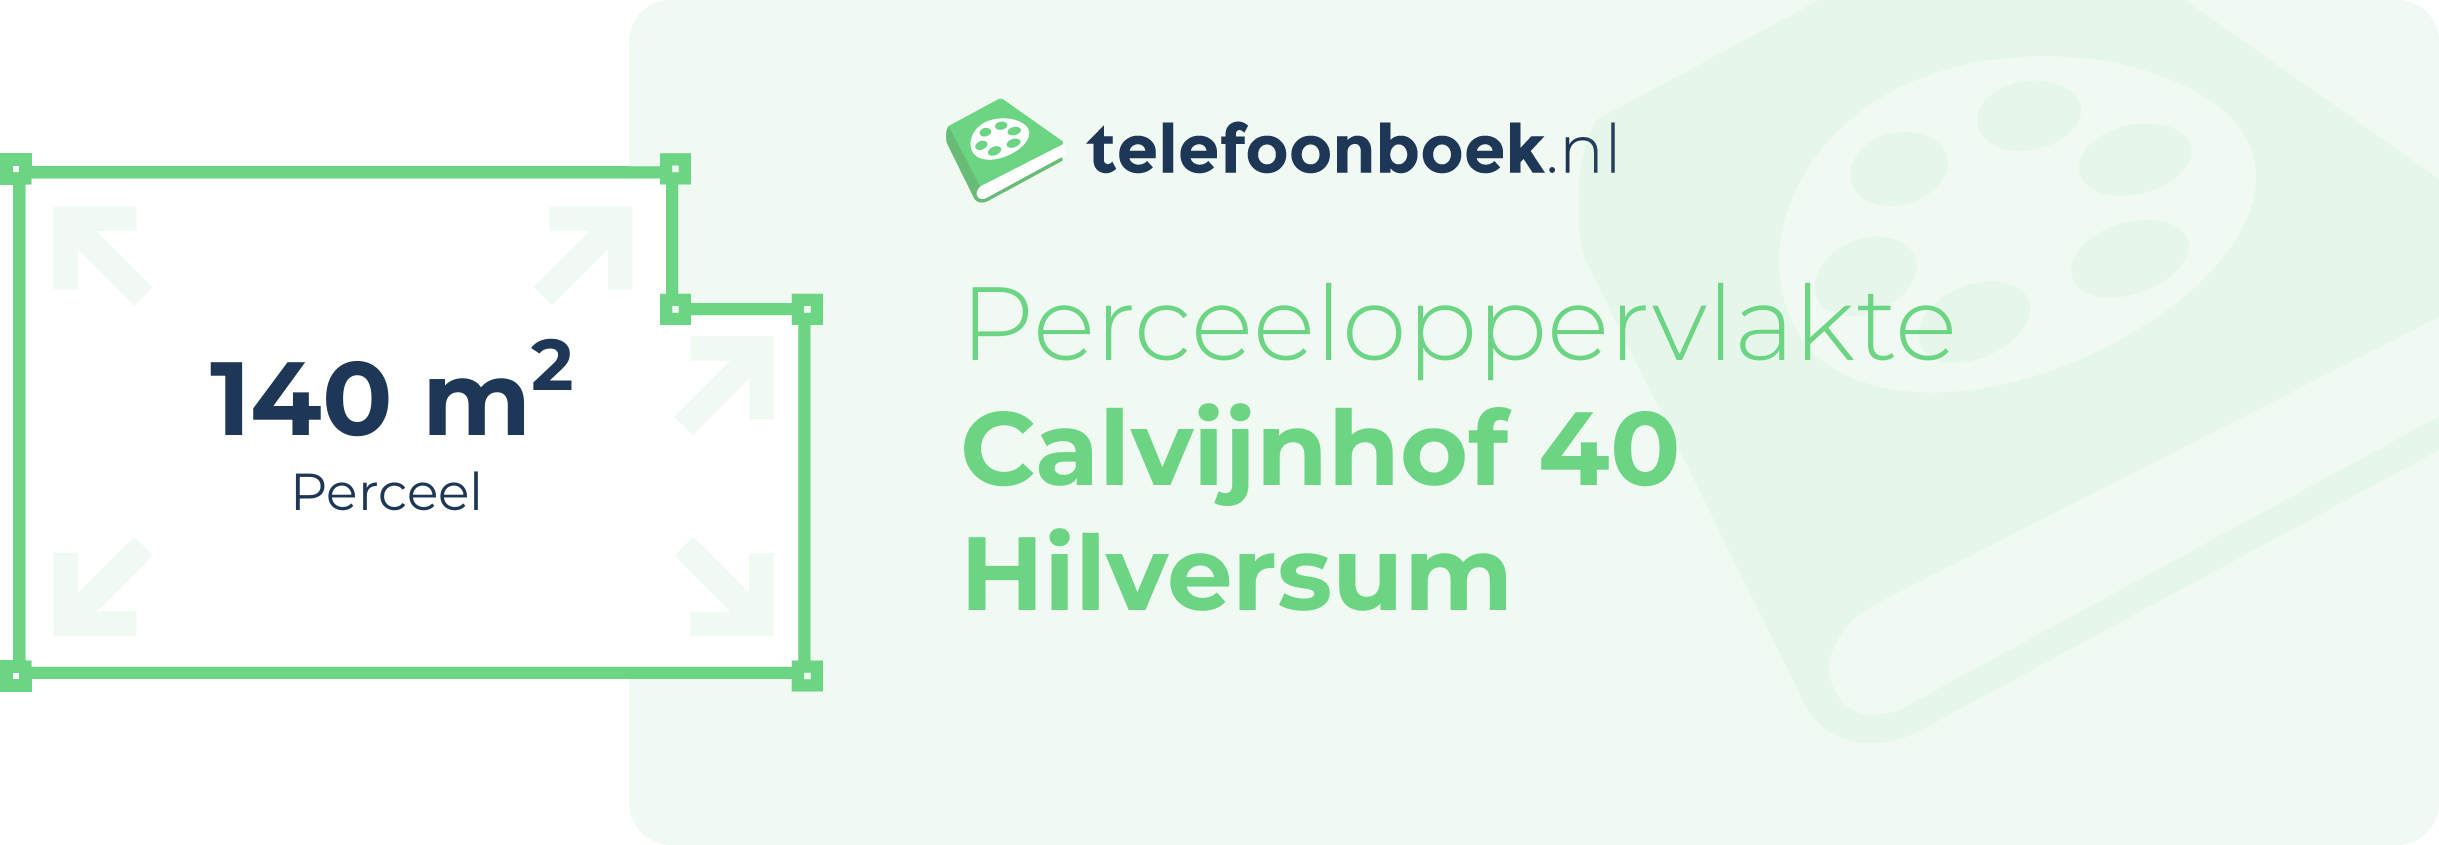 Perceeloppervlakte Calvijnhof 40 Hilversum